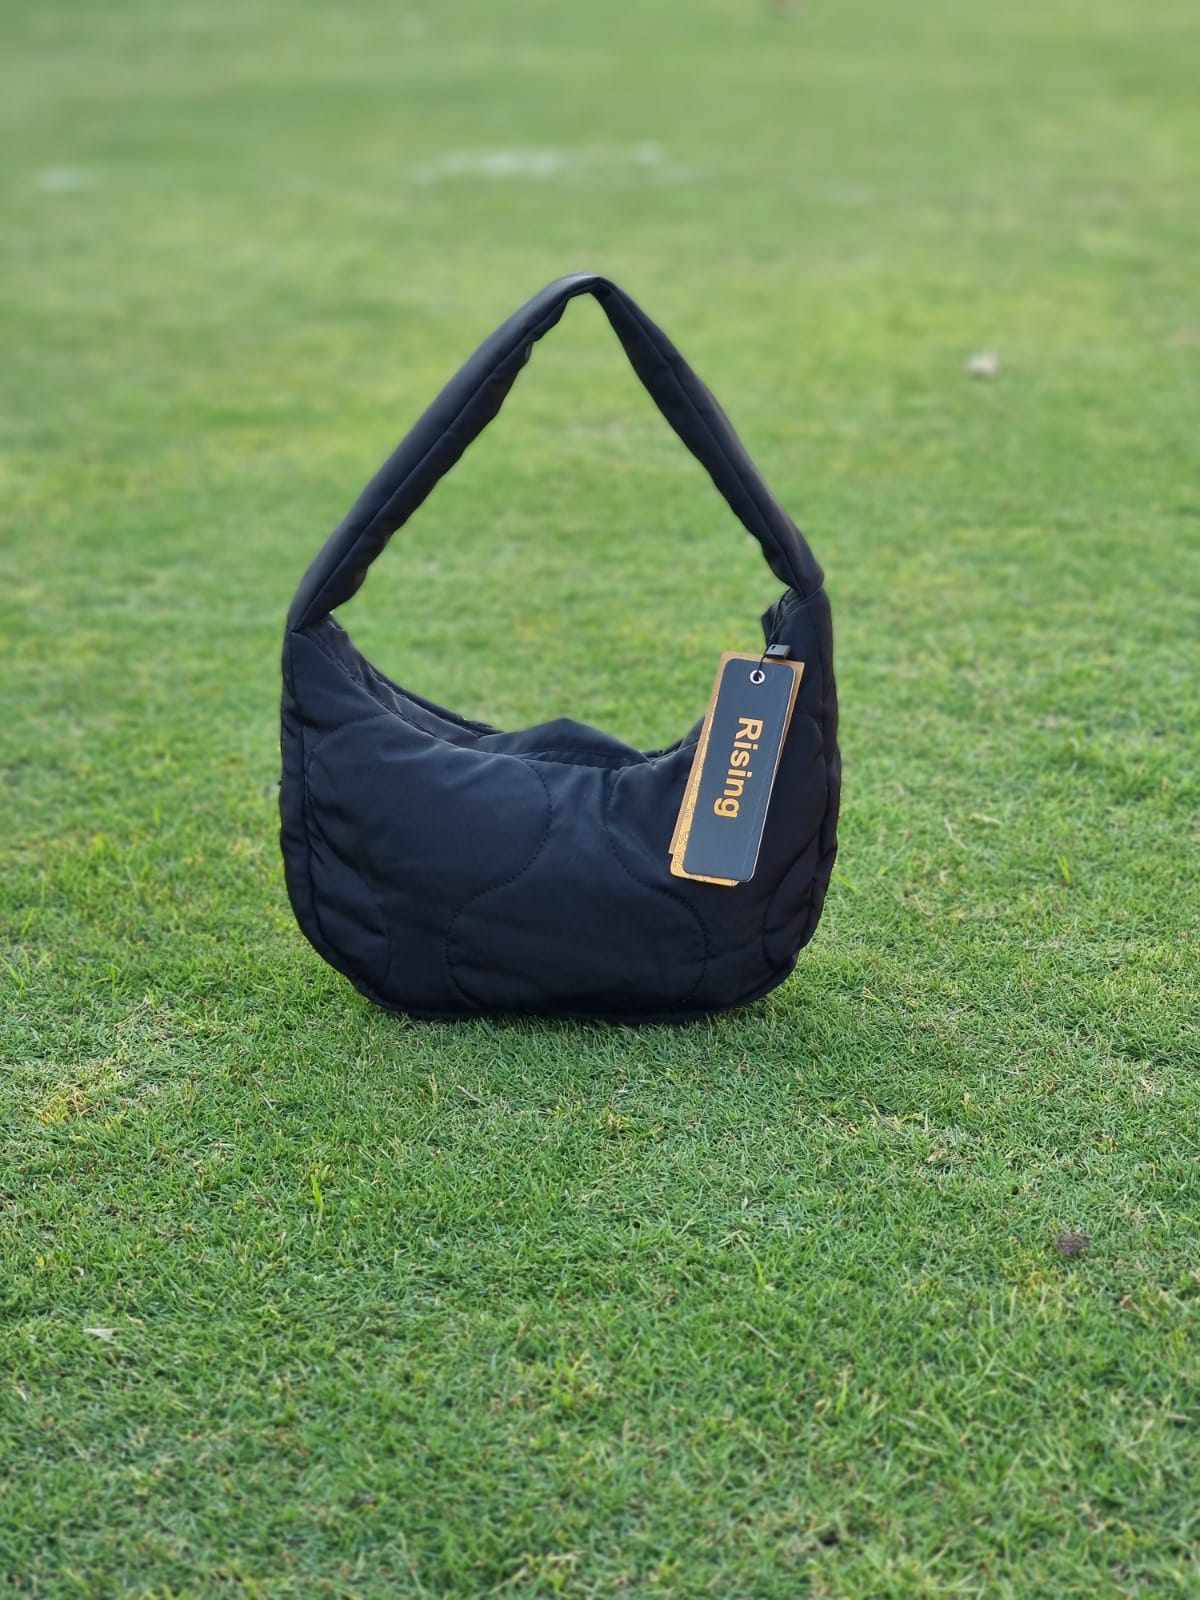 Quilted Puffer Hobo Bag Handbag for Outdoor Travel-Black